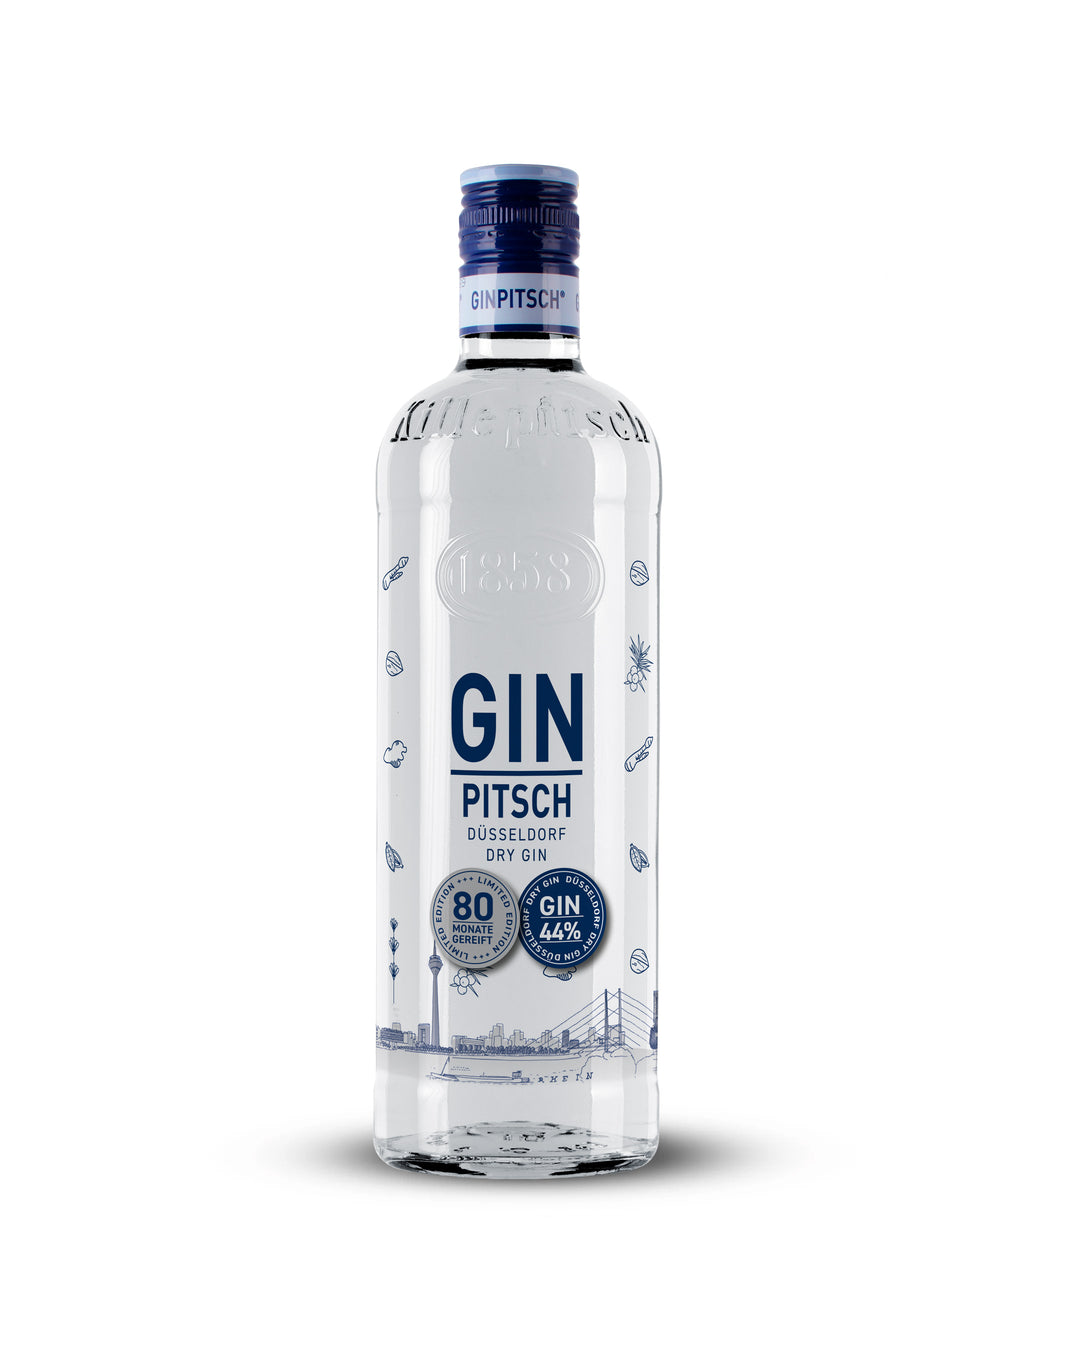 GIN Pitsch 44% - Düsseldorf Dry Gin 0,7L Limited Edition